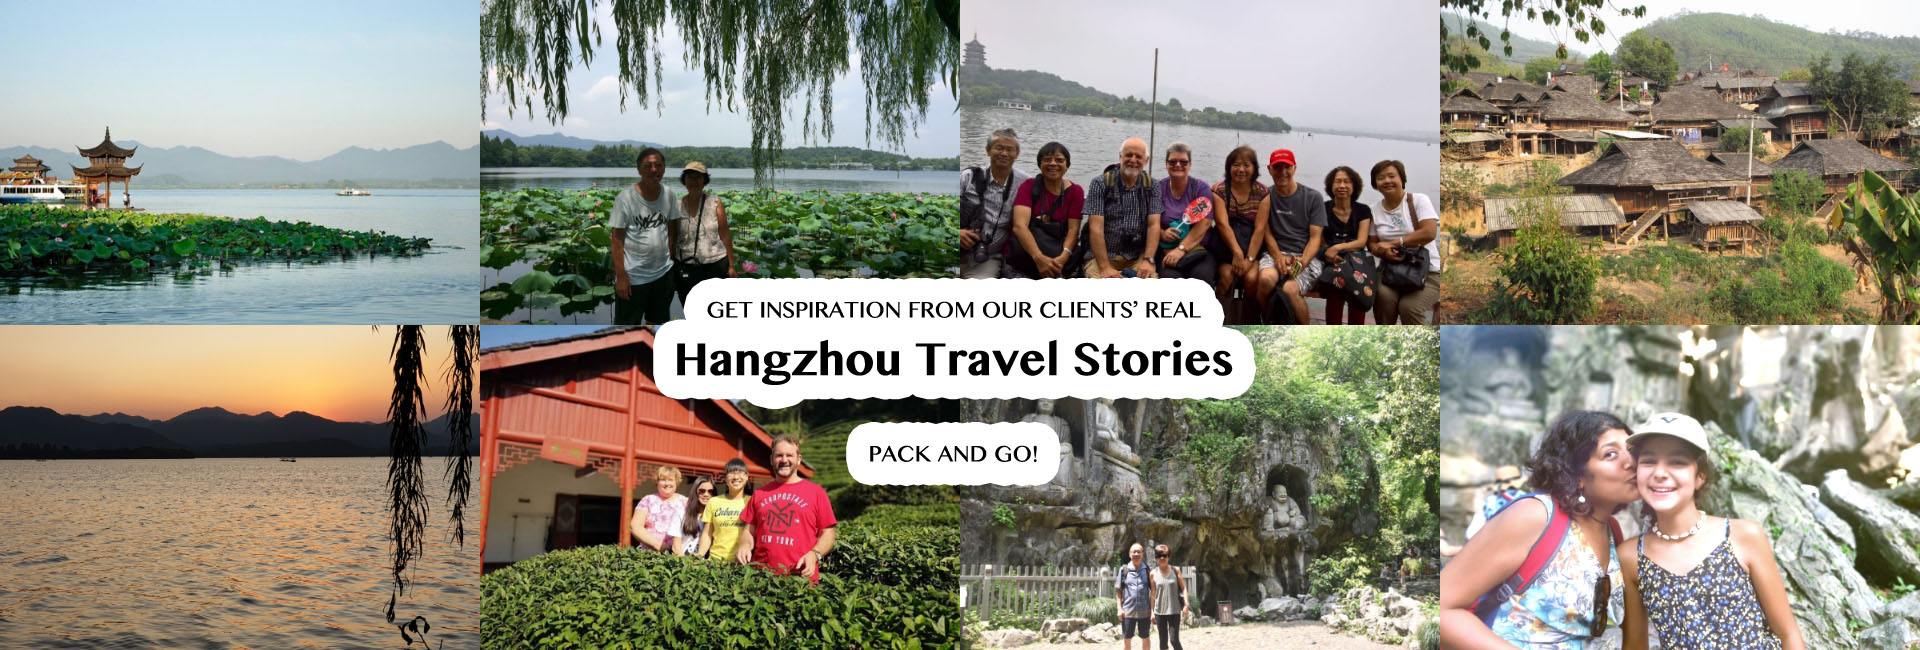 Hangzhou Travel Stories